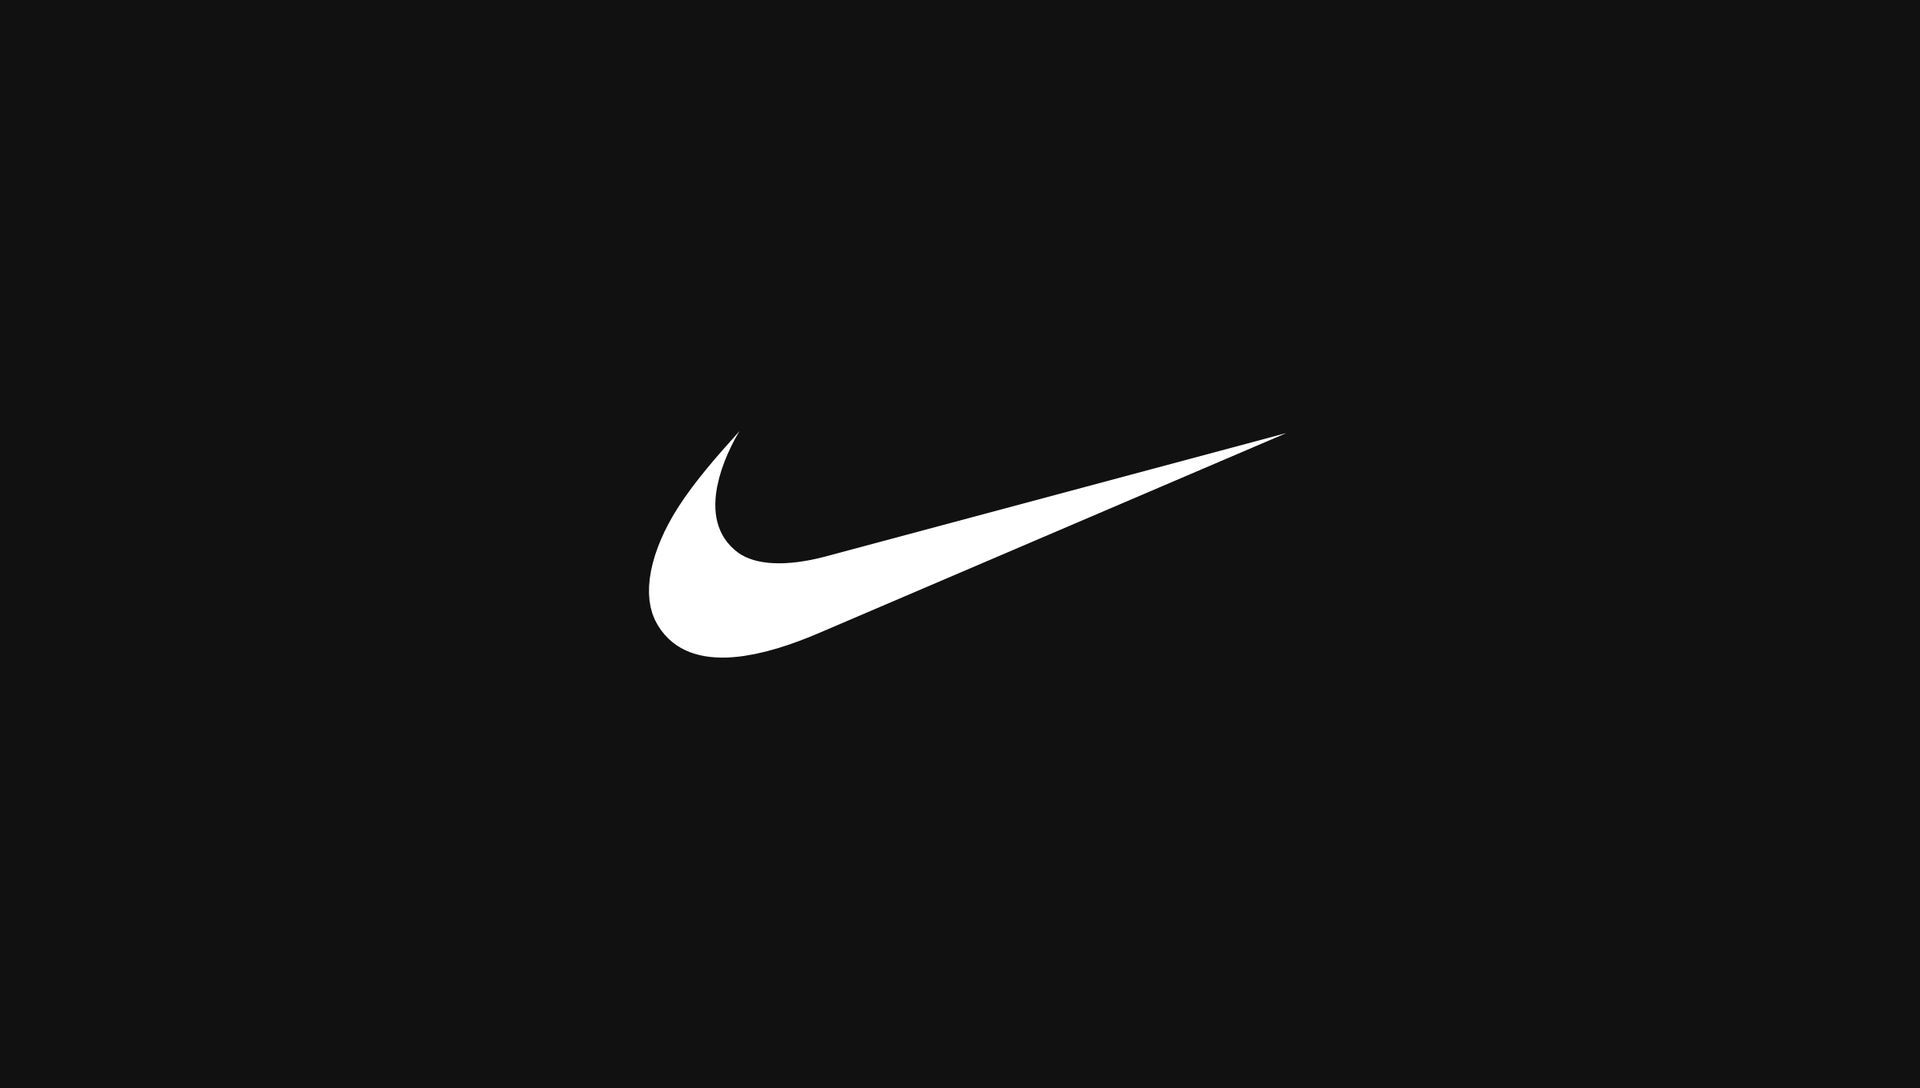 Baya Sustancial diapositiva Site oficial de Nike. Nike ES